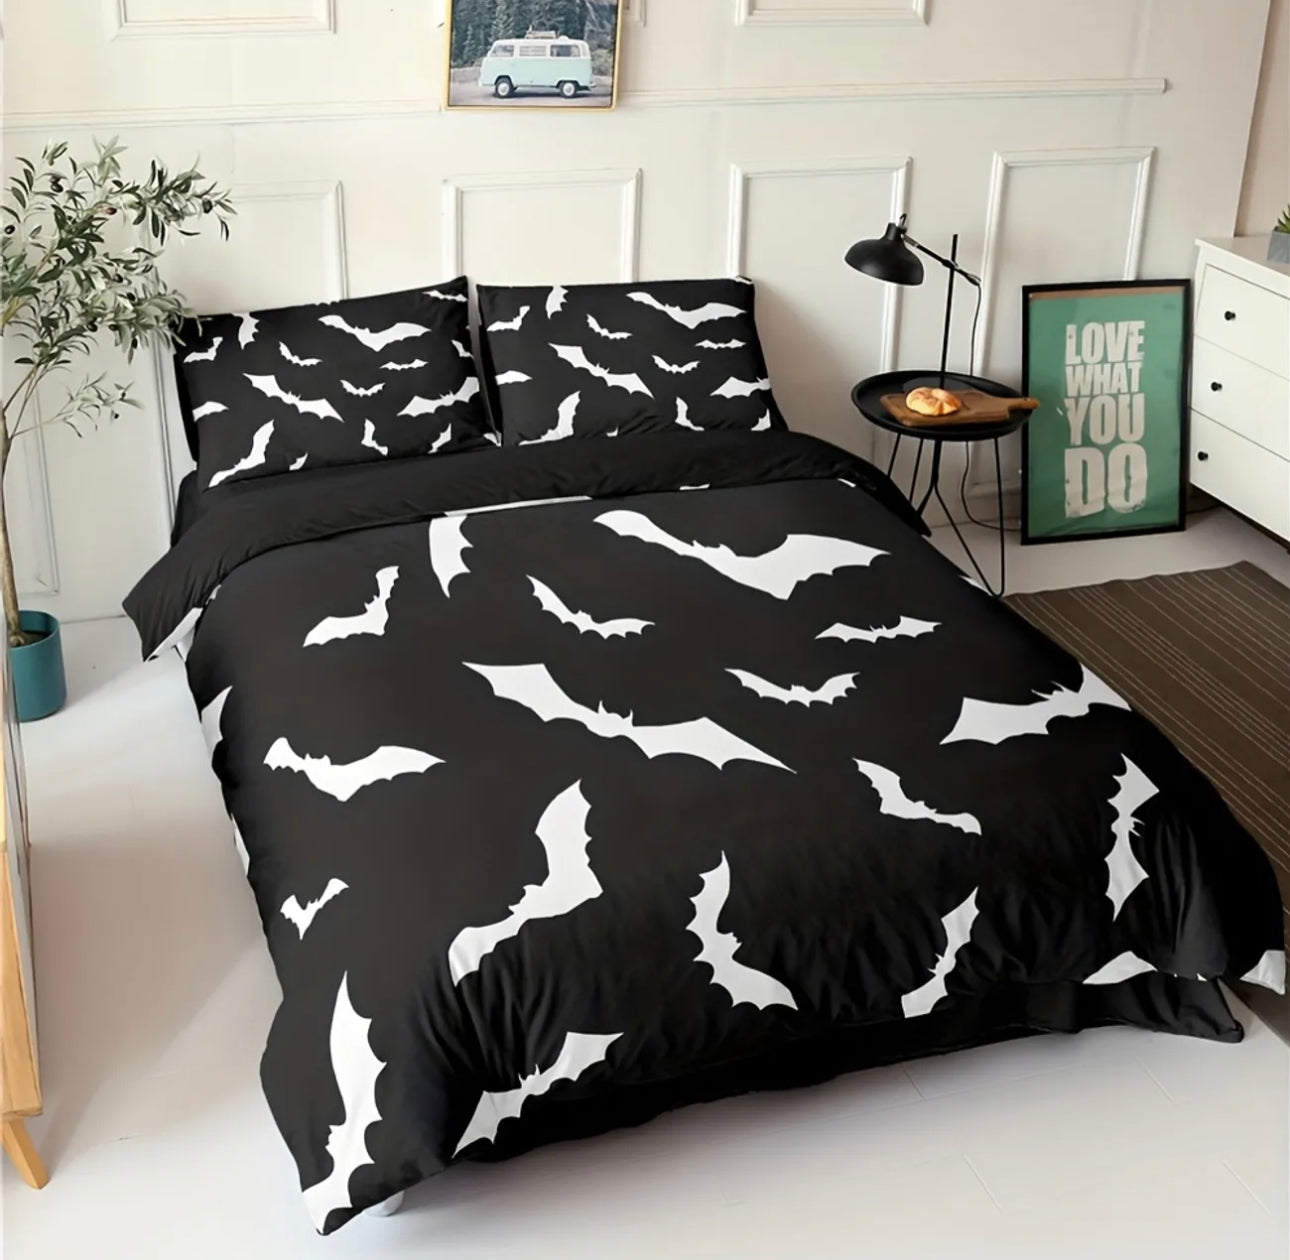 2/3Pcs Flying Bats Printed Duvet Cover Set (1 Duvet Cover + 1/2 Pillowcase), Black White Bedding Sets For Bedroom Dorm Room(No Quilt)